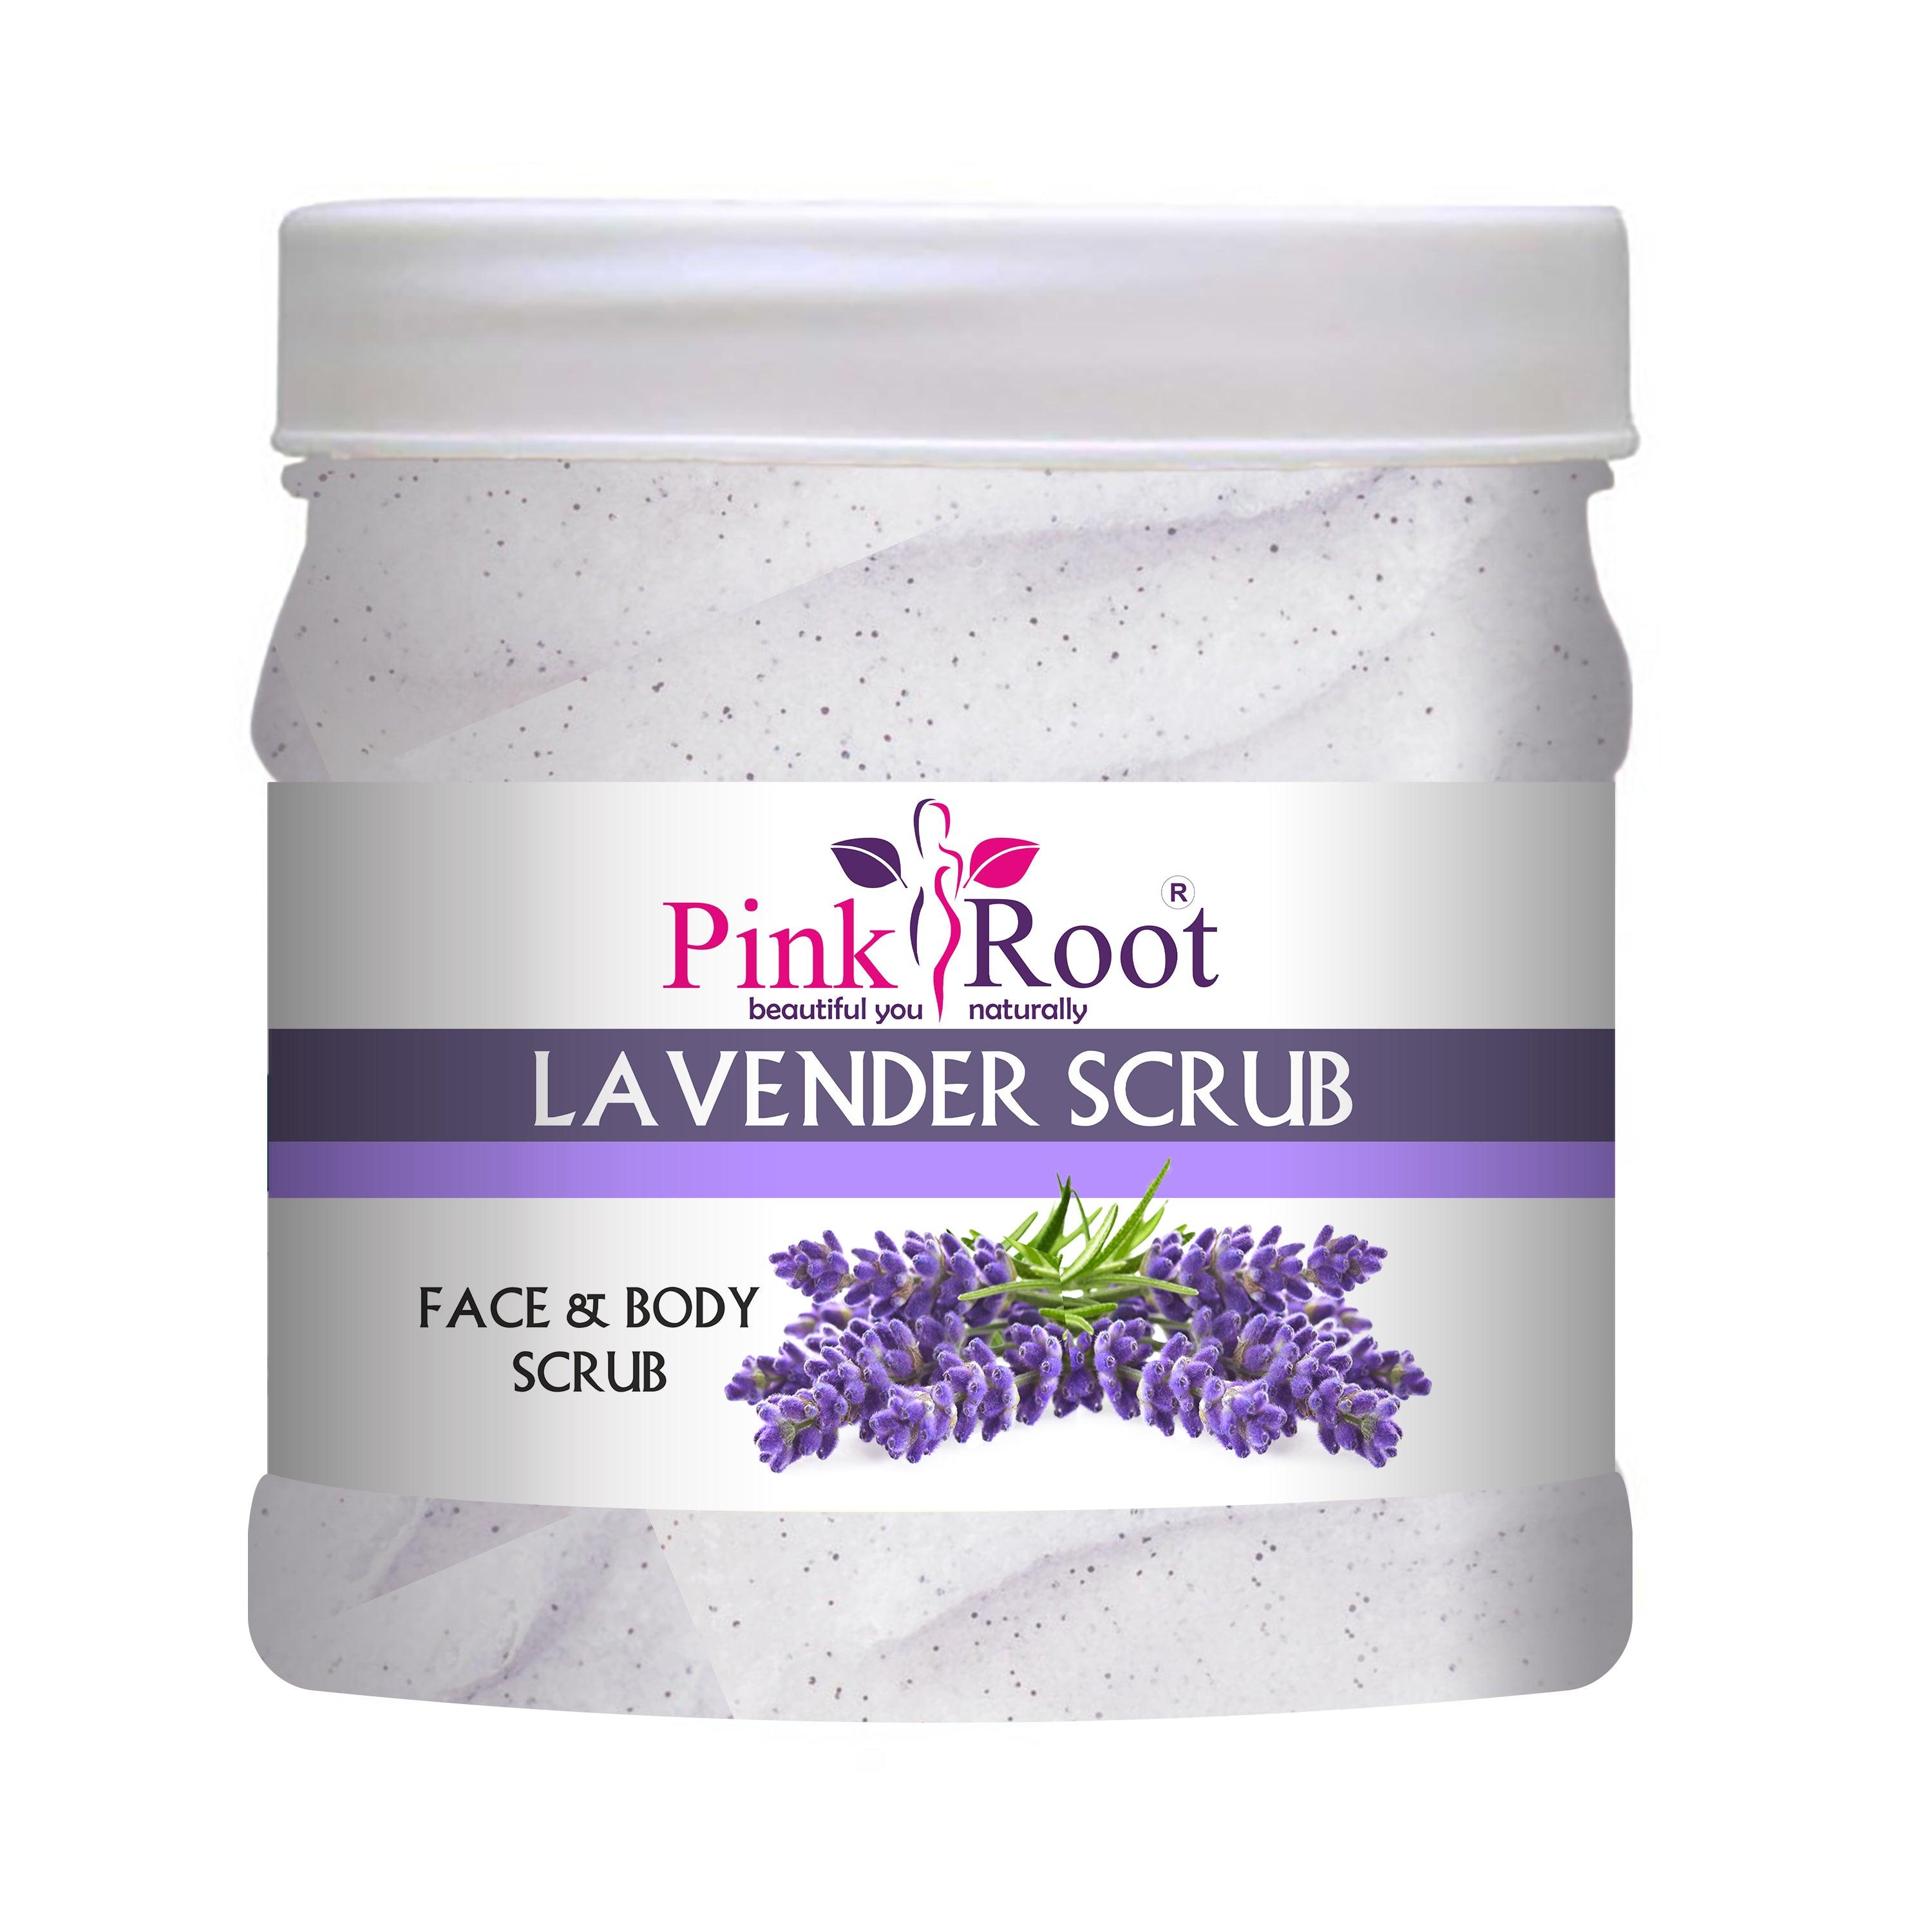 Lavender Scrub Face & Body Scrub 500ml - Pink Root